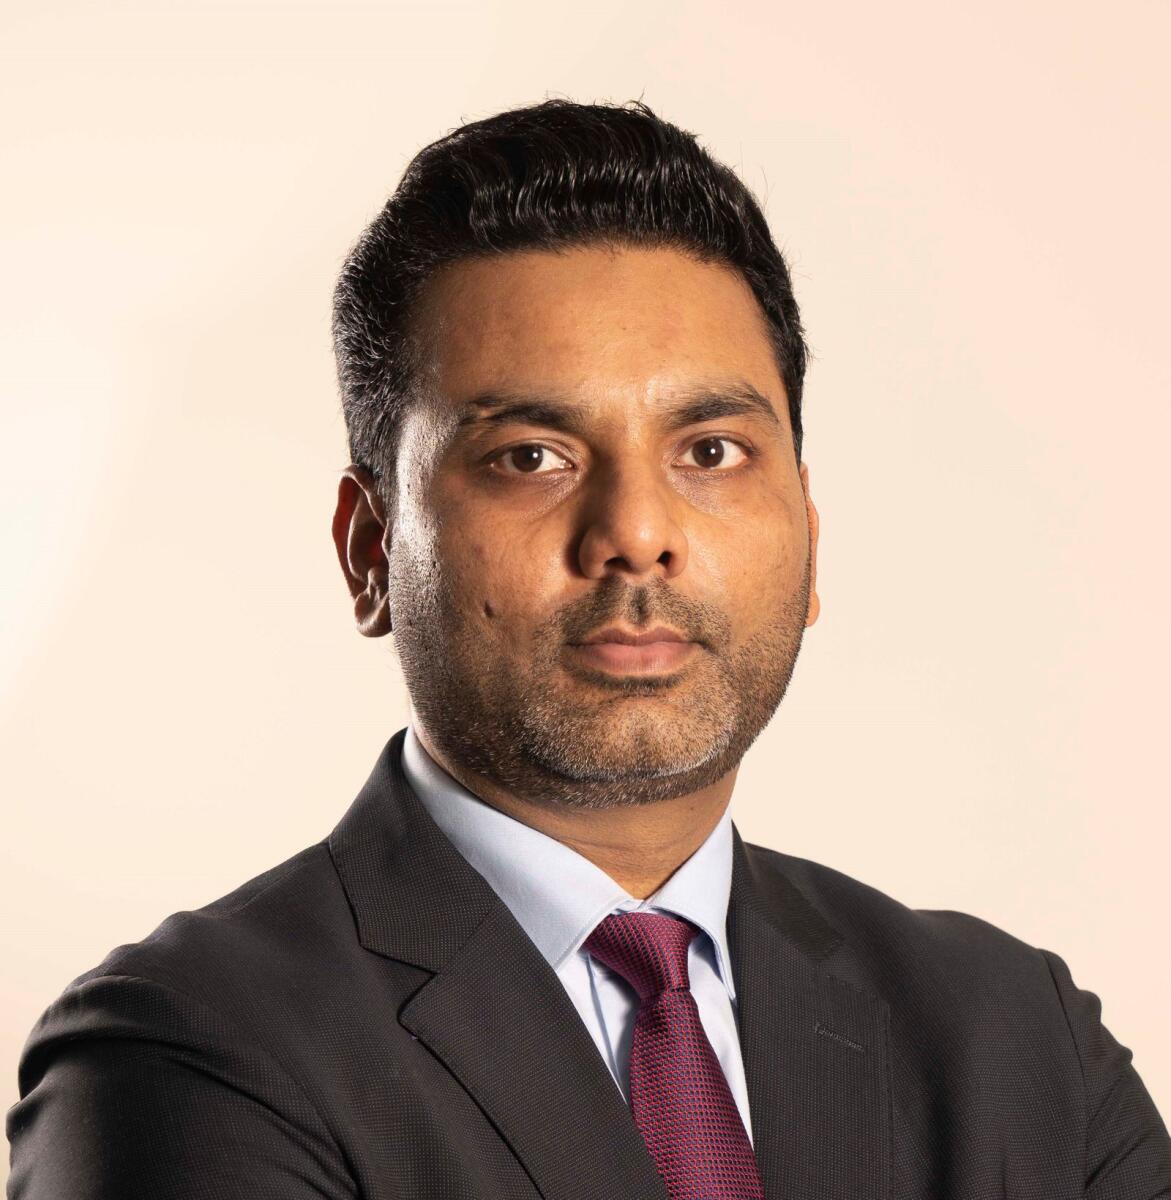 Mubashshir Usmani, Emirates Cricket Board's General Secretary